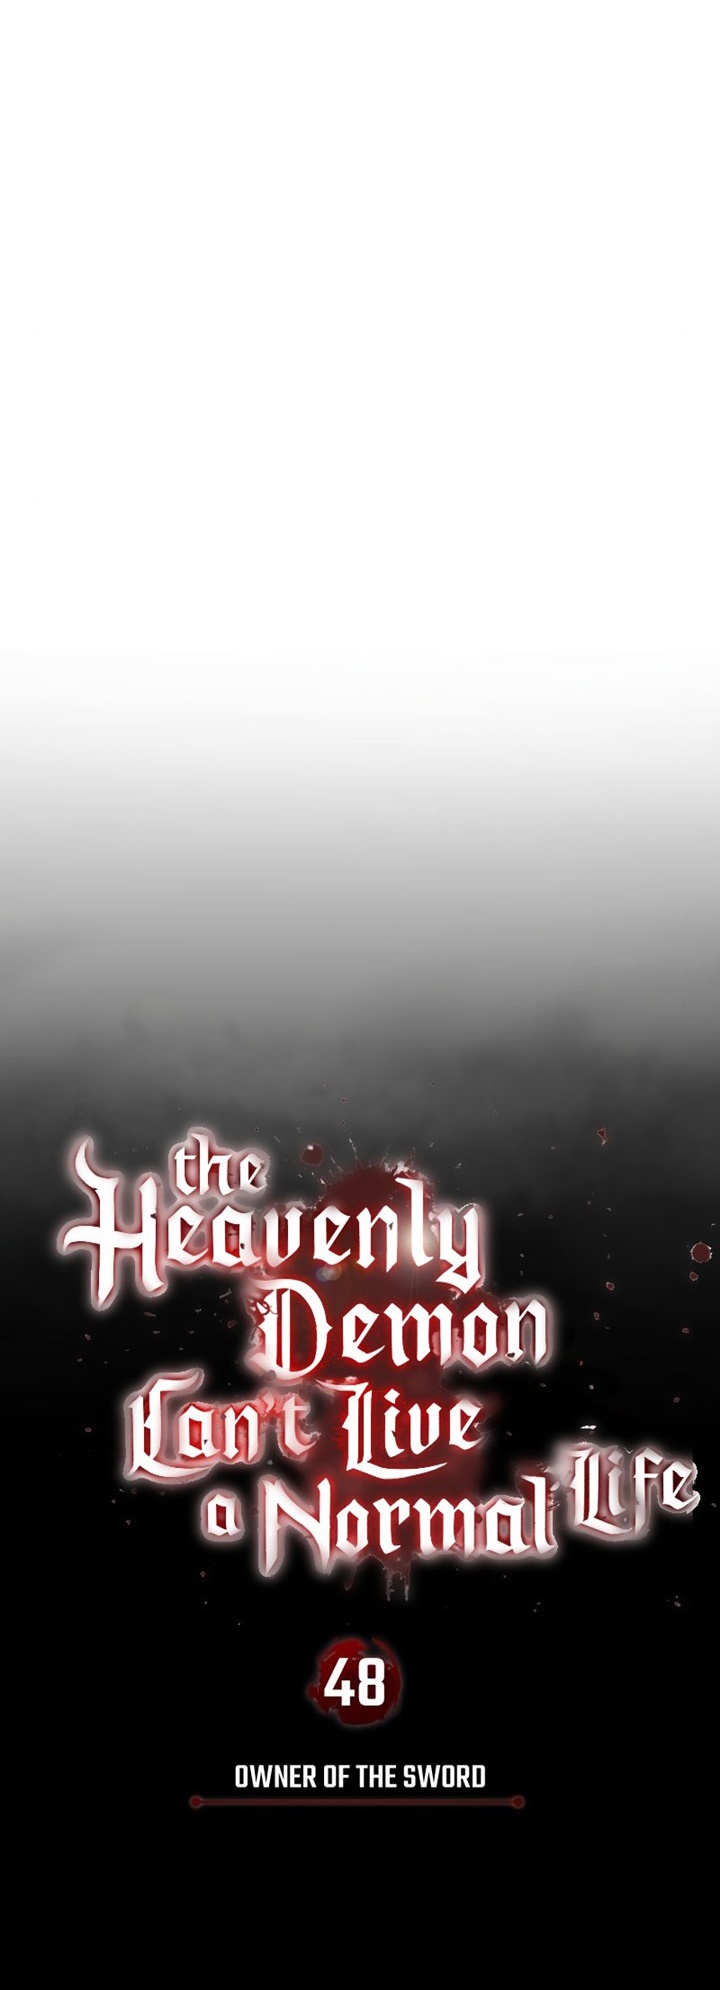 The Heavenly Demon Canโ€t Live a Normal Life 48 (32)